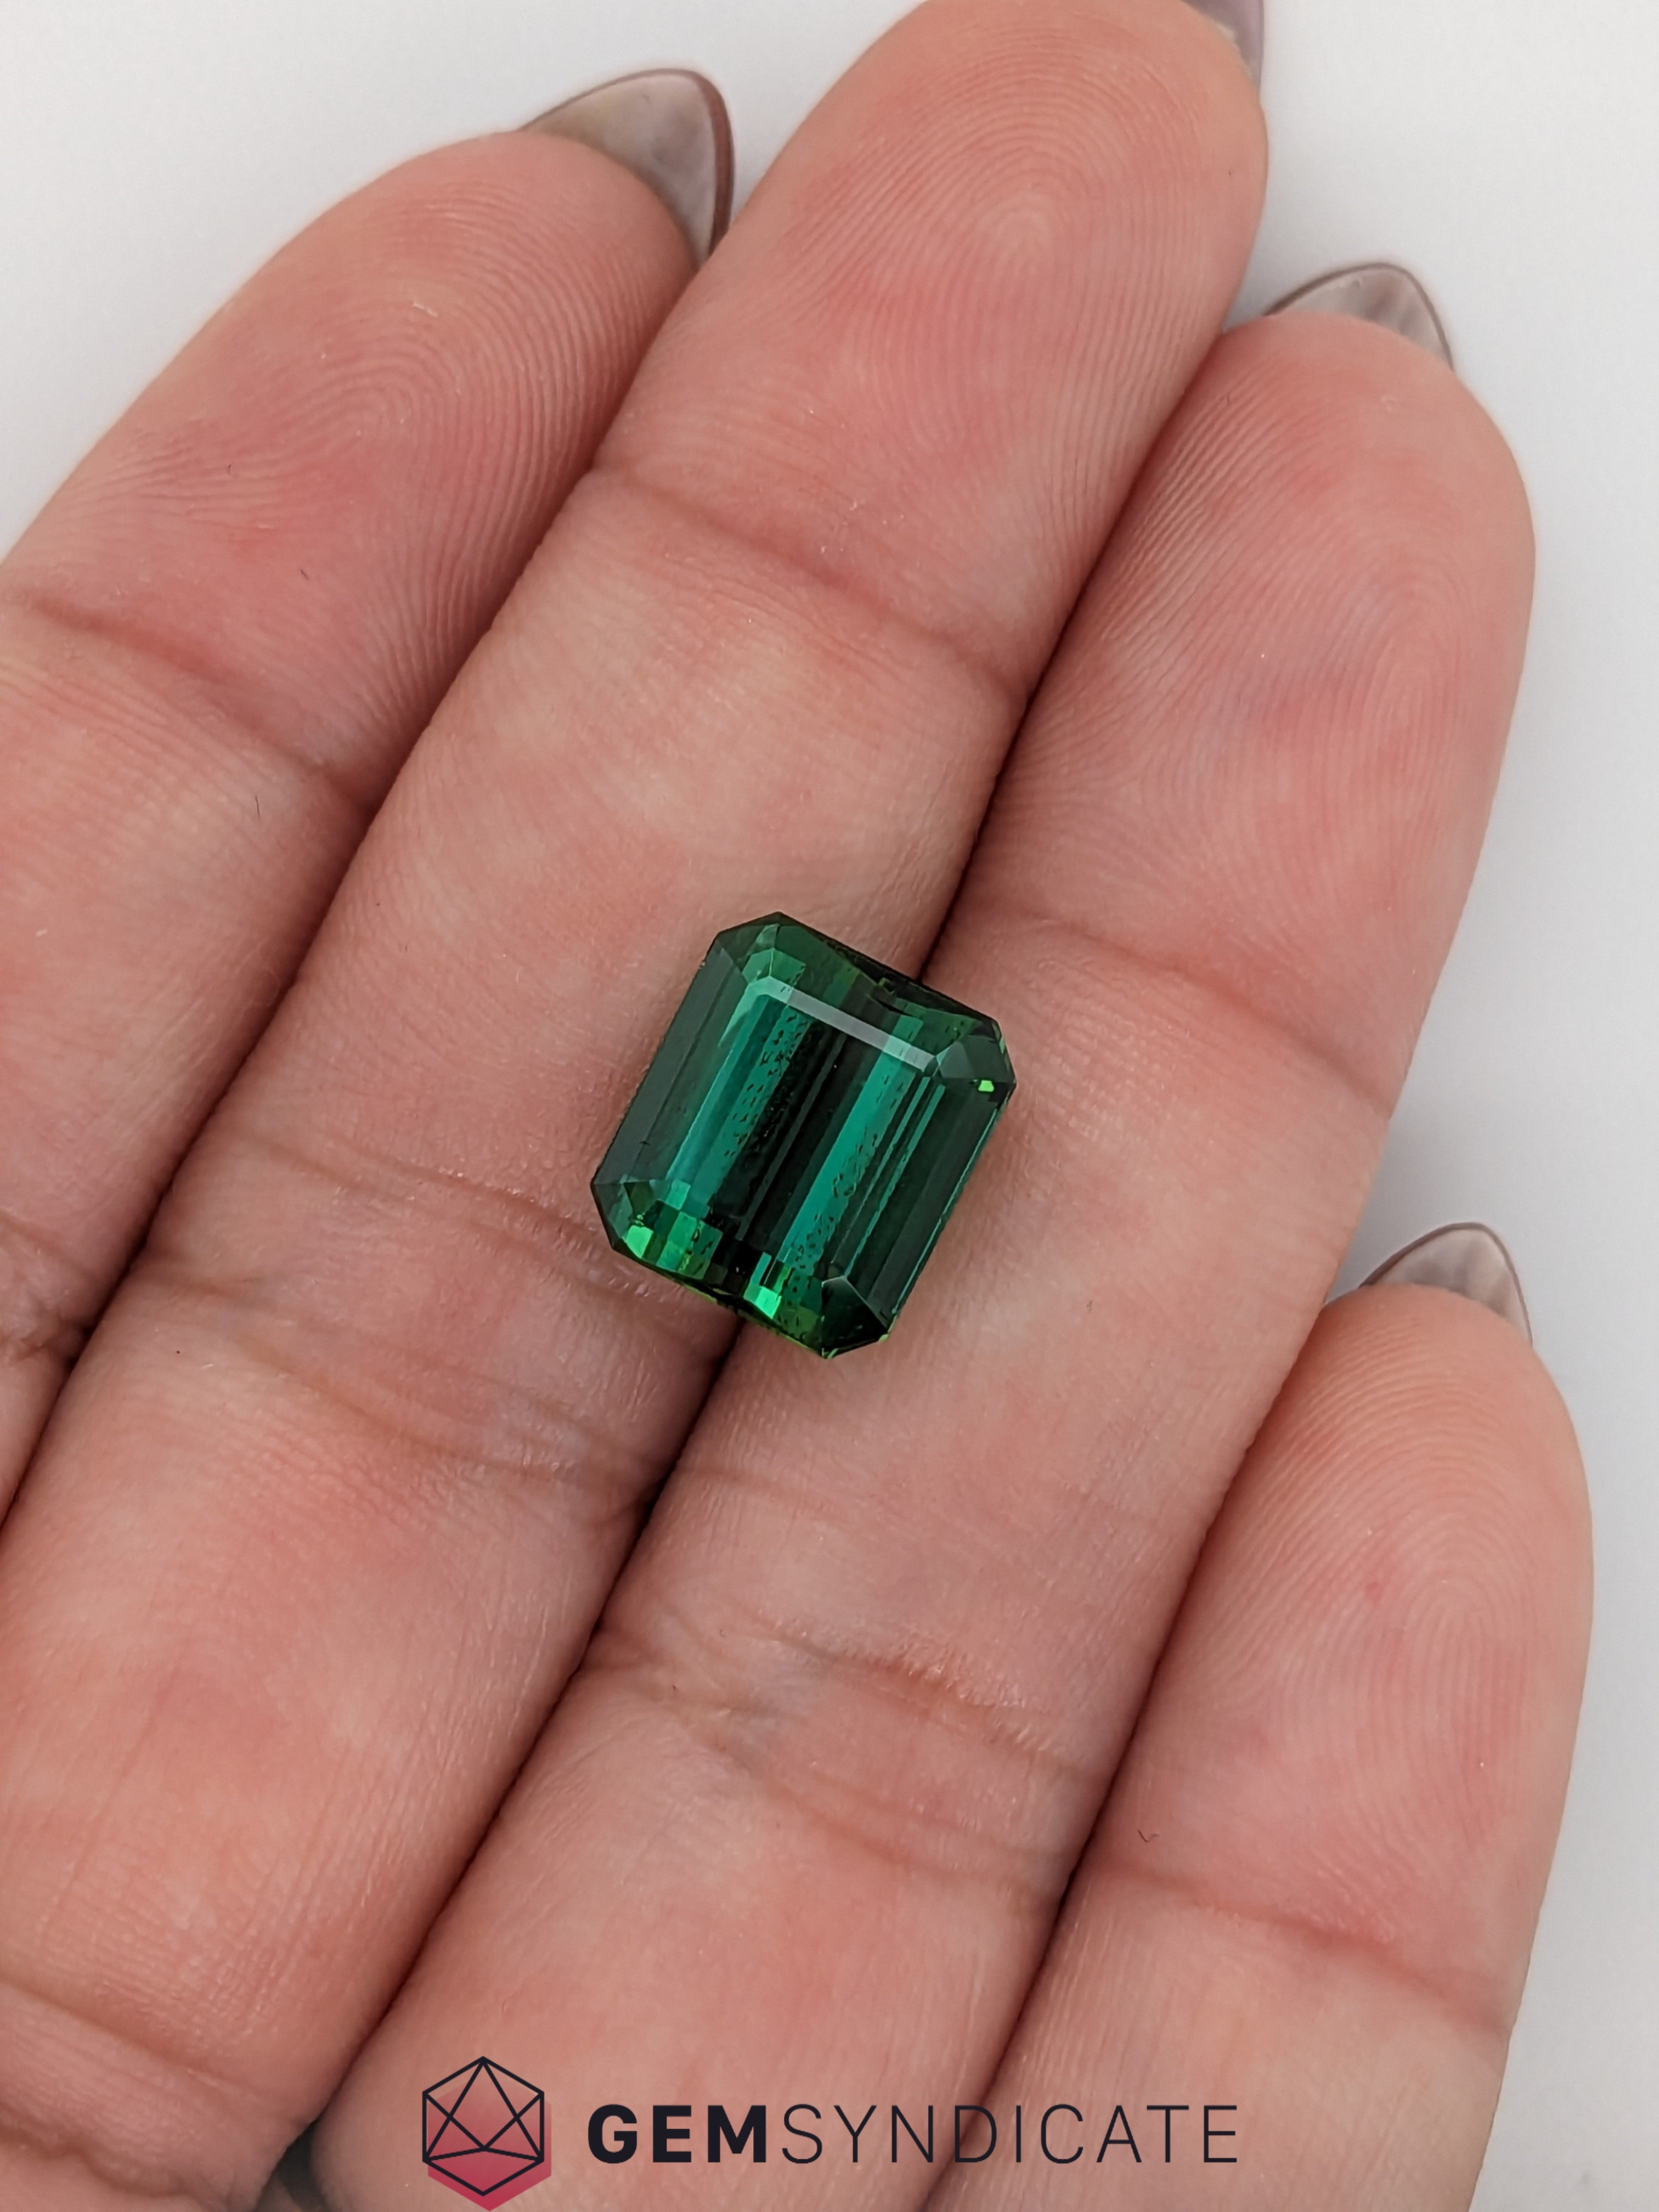 Sublime Emerald Cut Green Tourmaline 6.54ct